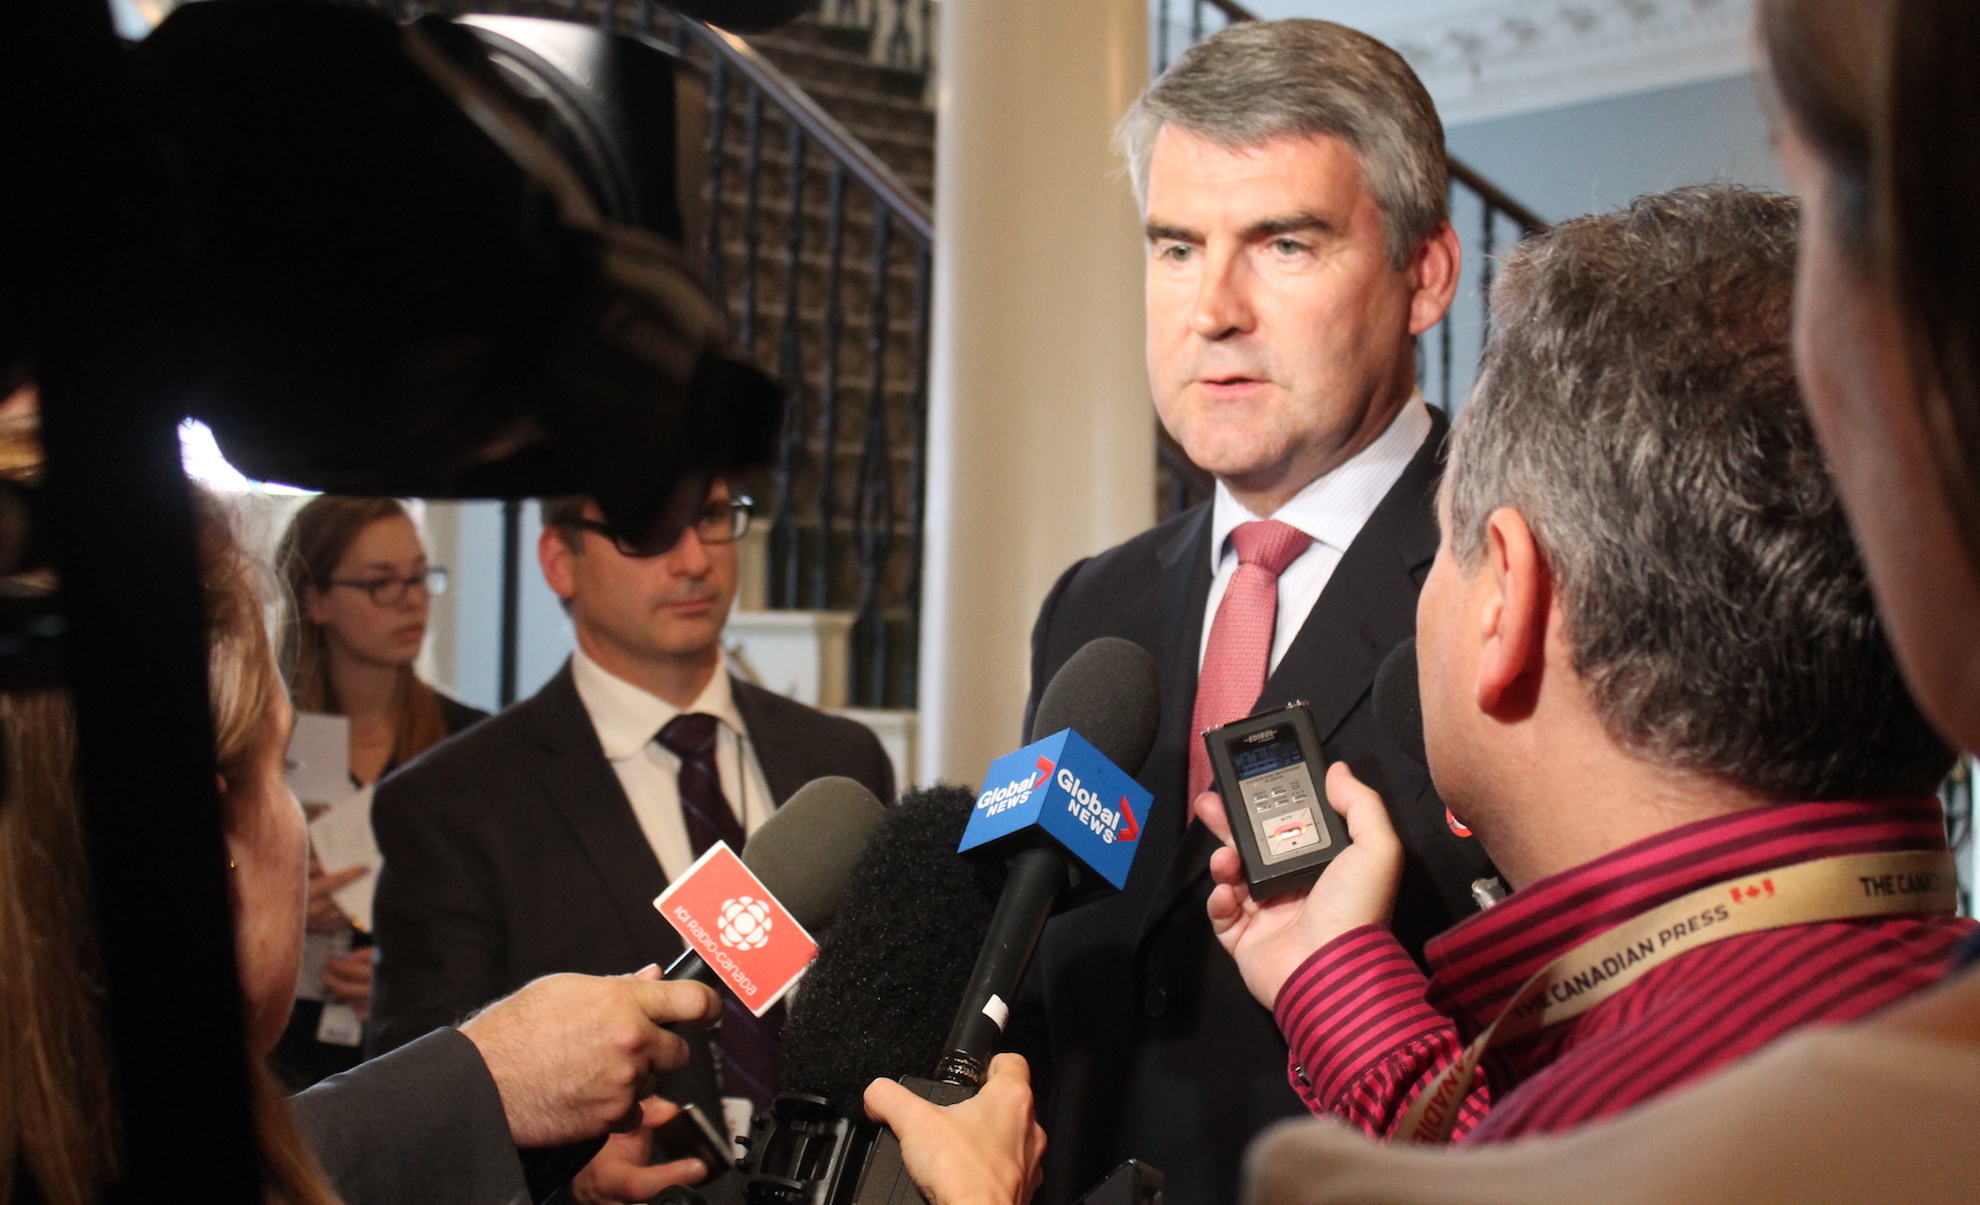 Premier Stephen McNeil is one of three Nova Scotia politicians nominated for a CFIB Golden Scissors Award.